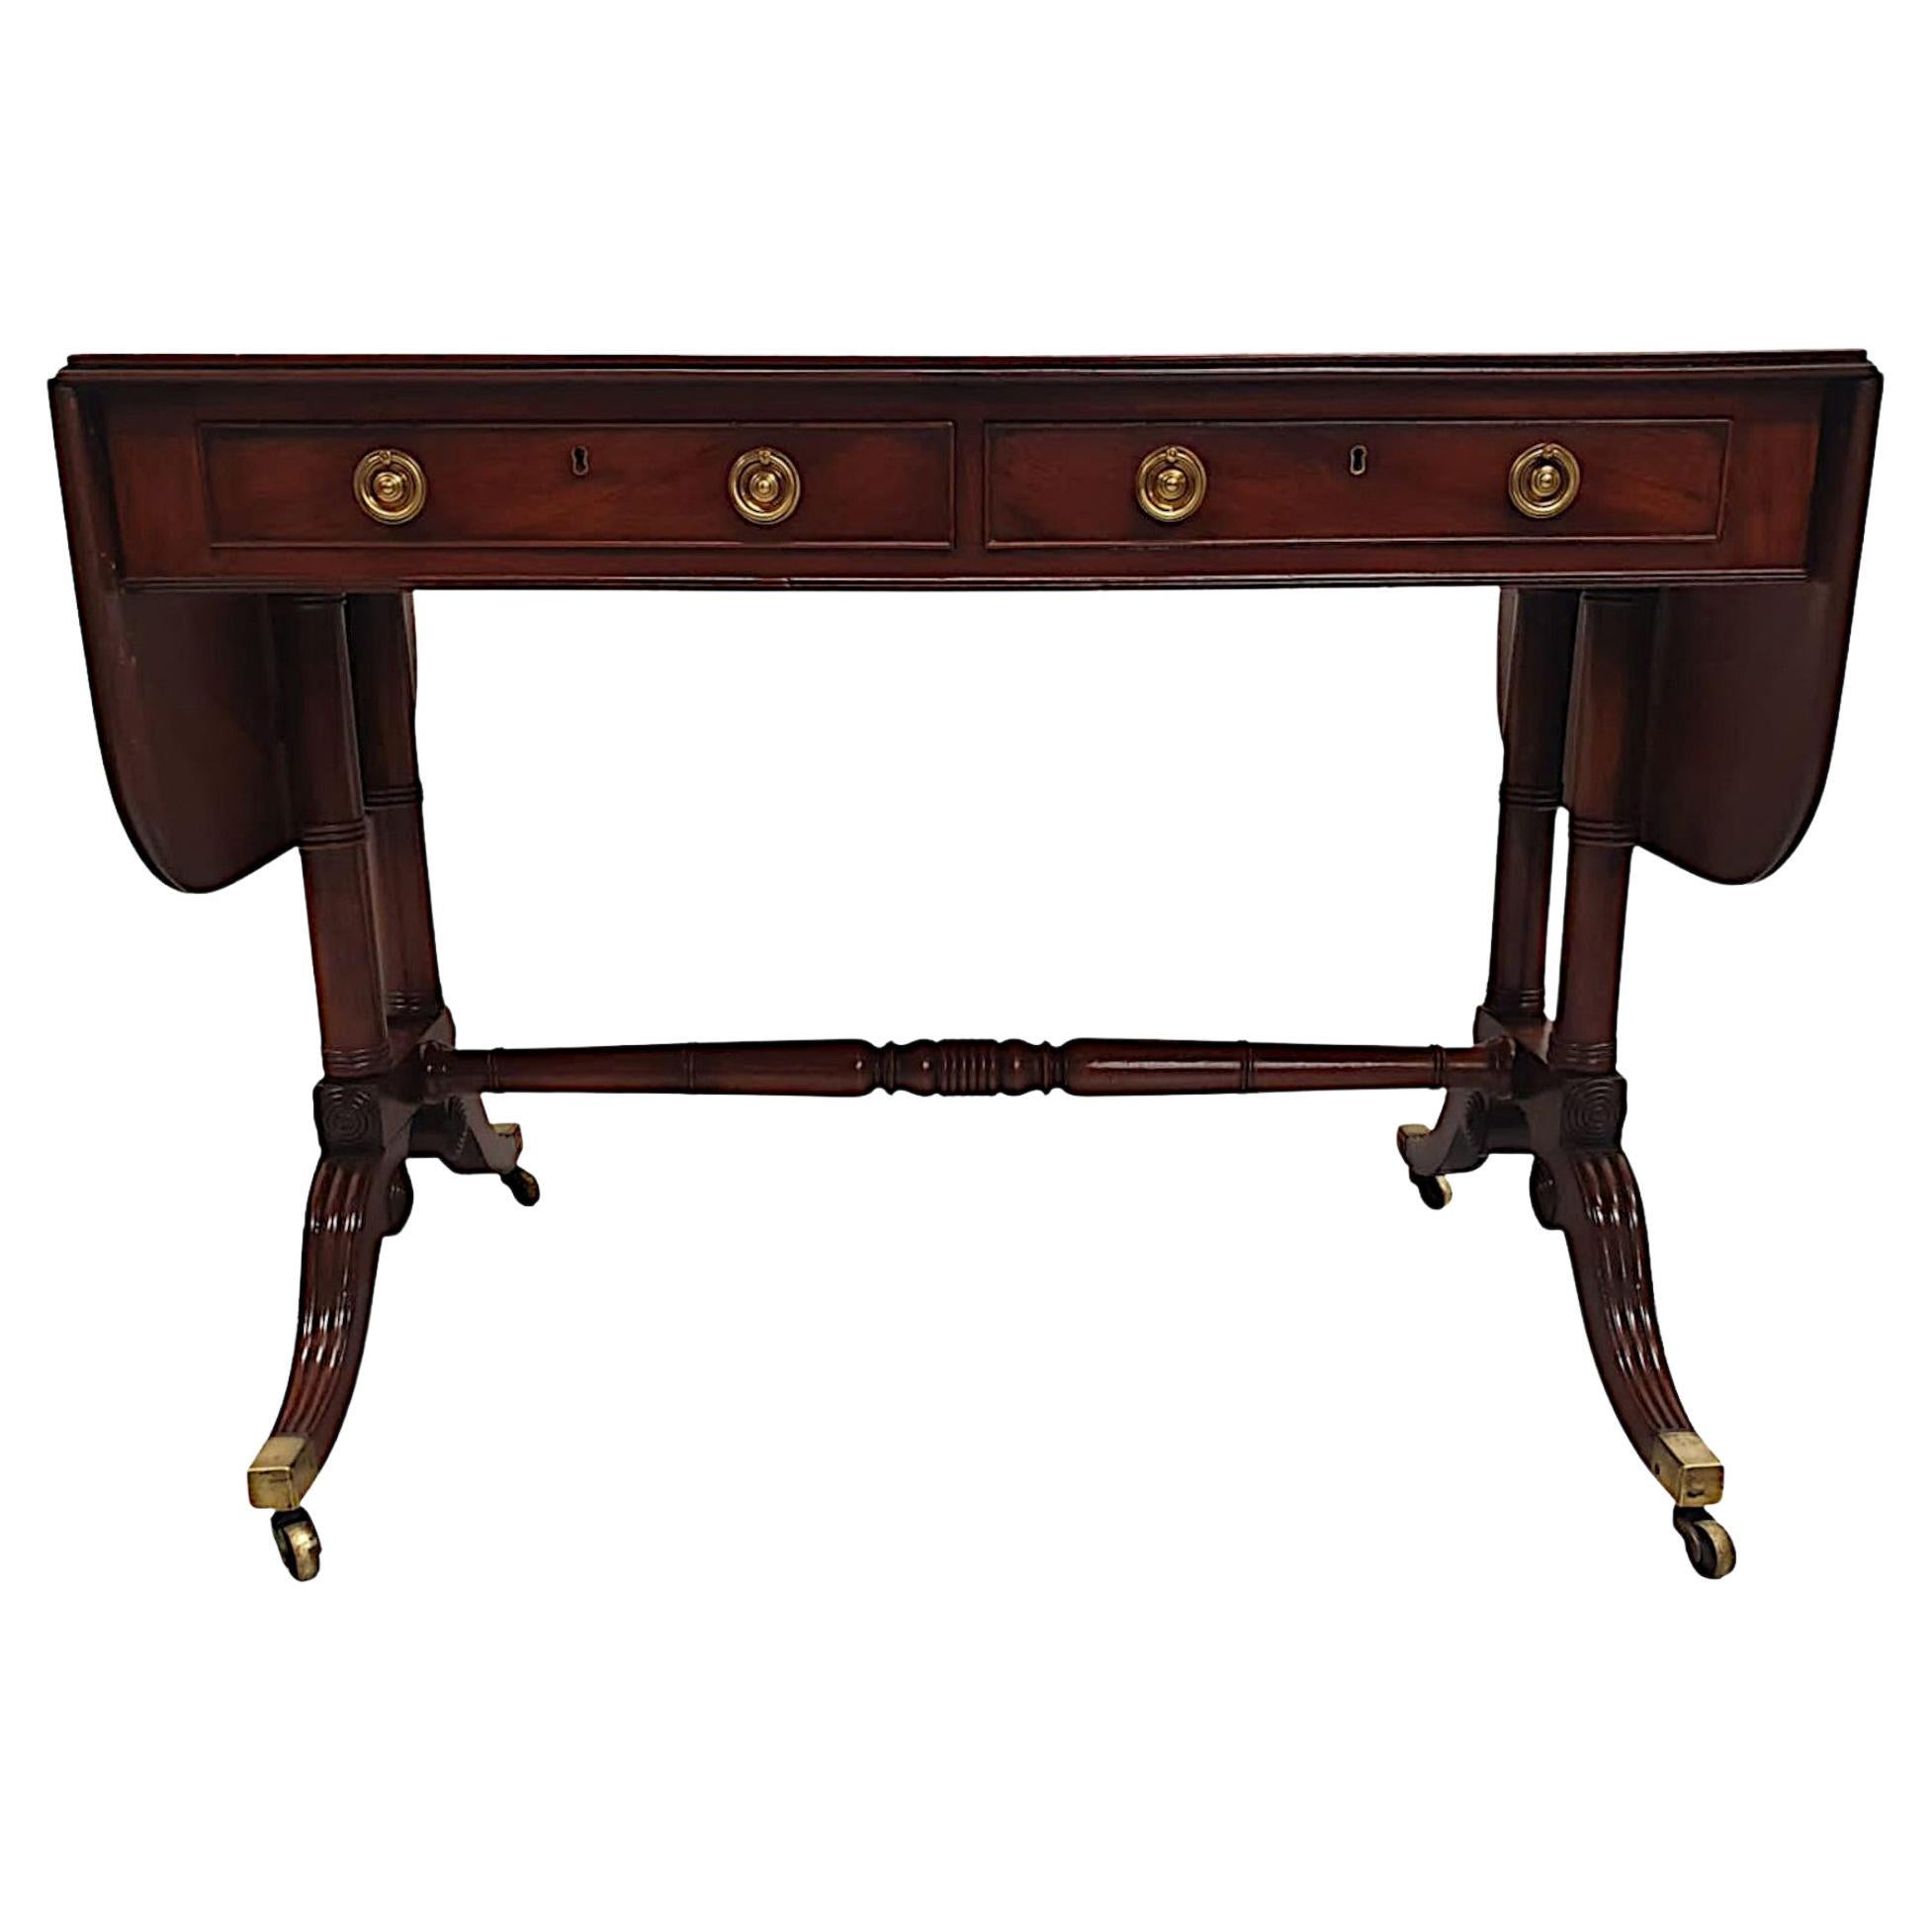 Very Fine Early 19th Century Regency Sofa Table